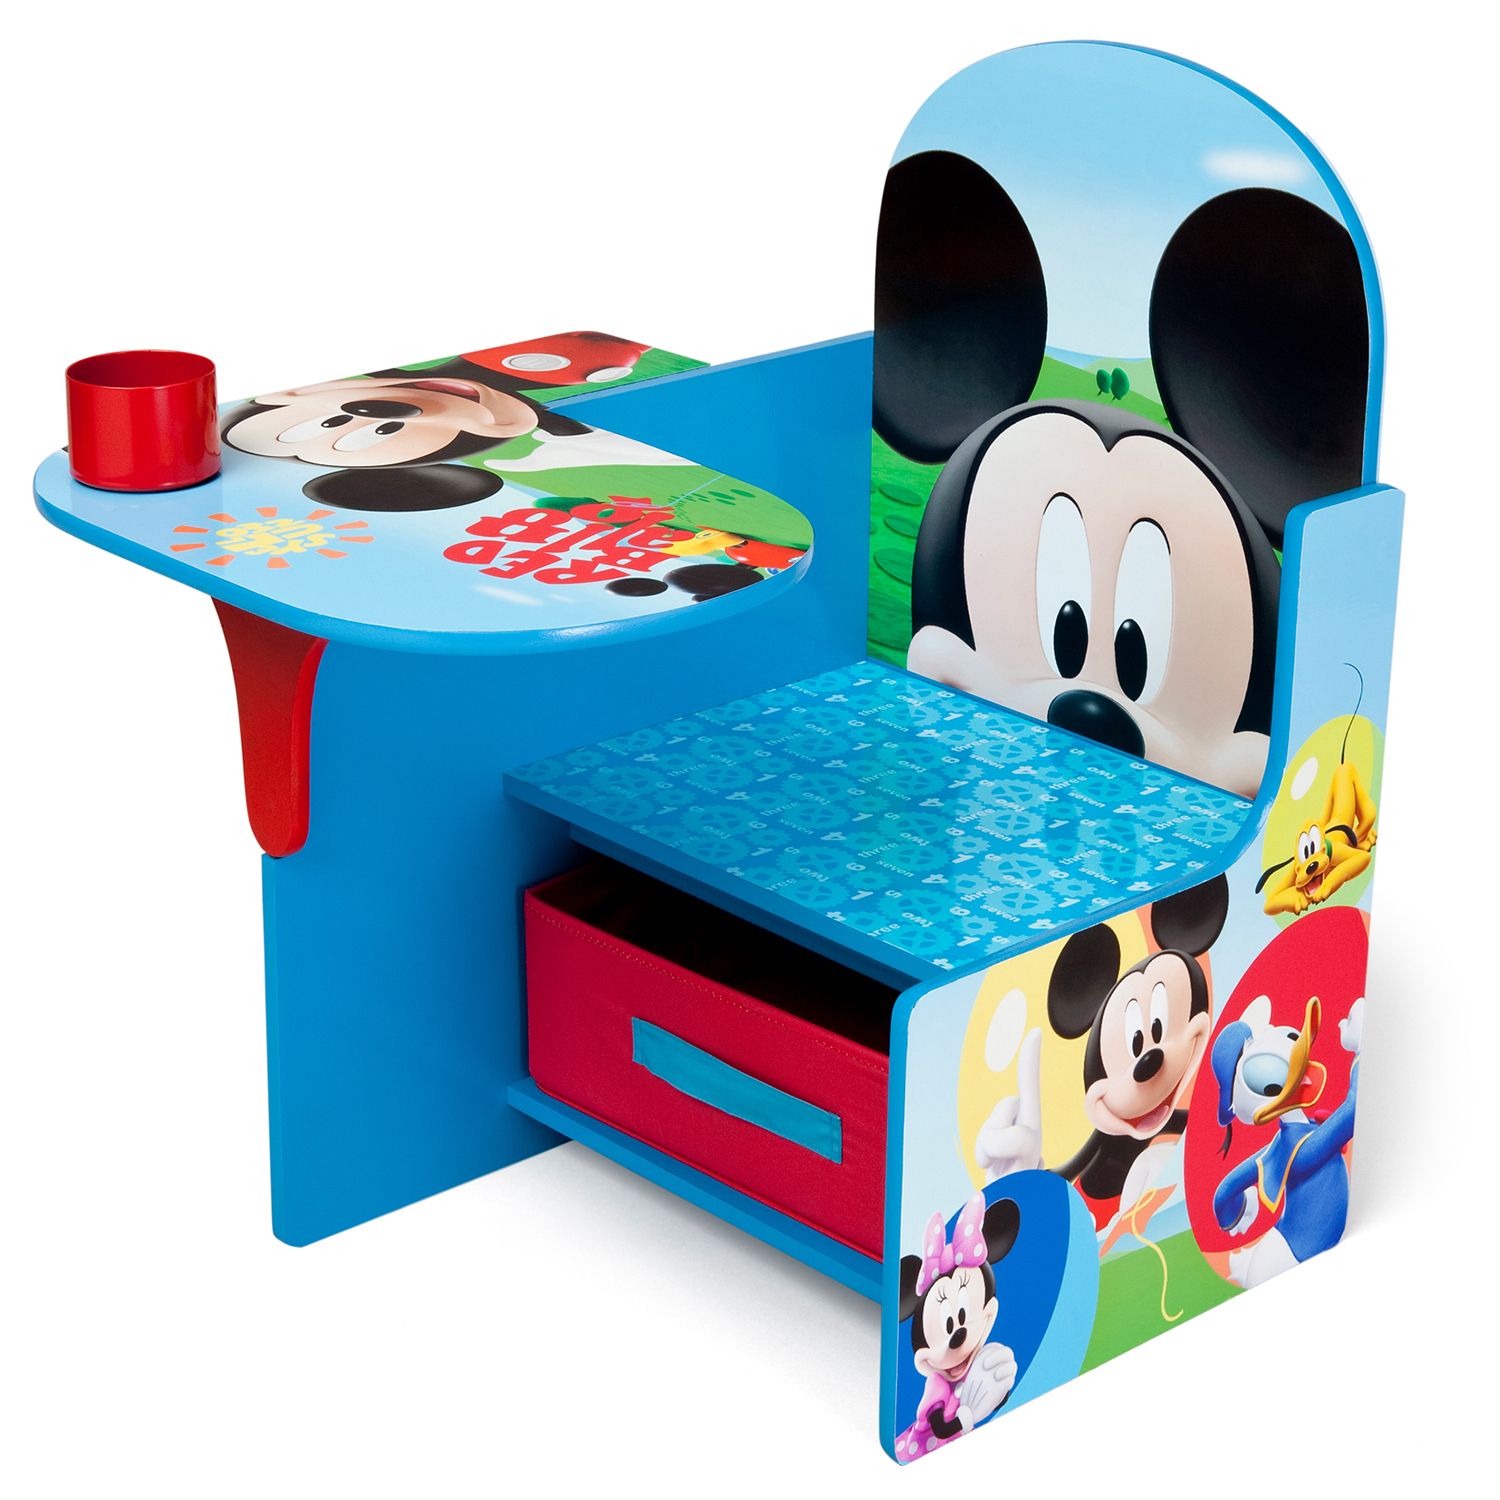 disney mickey mouse chair desk with storage bin by delta children